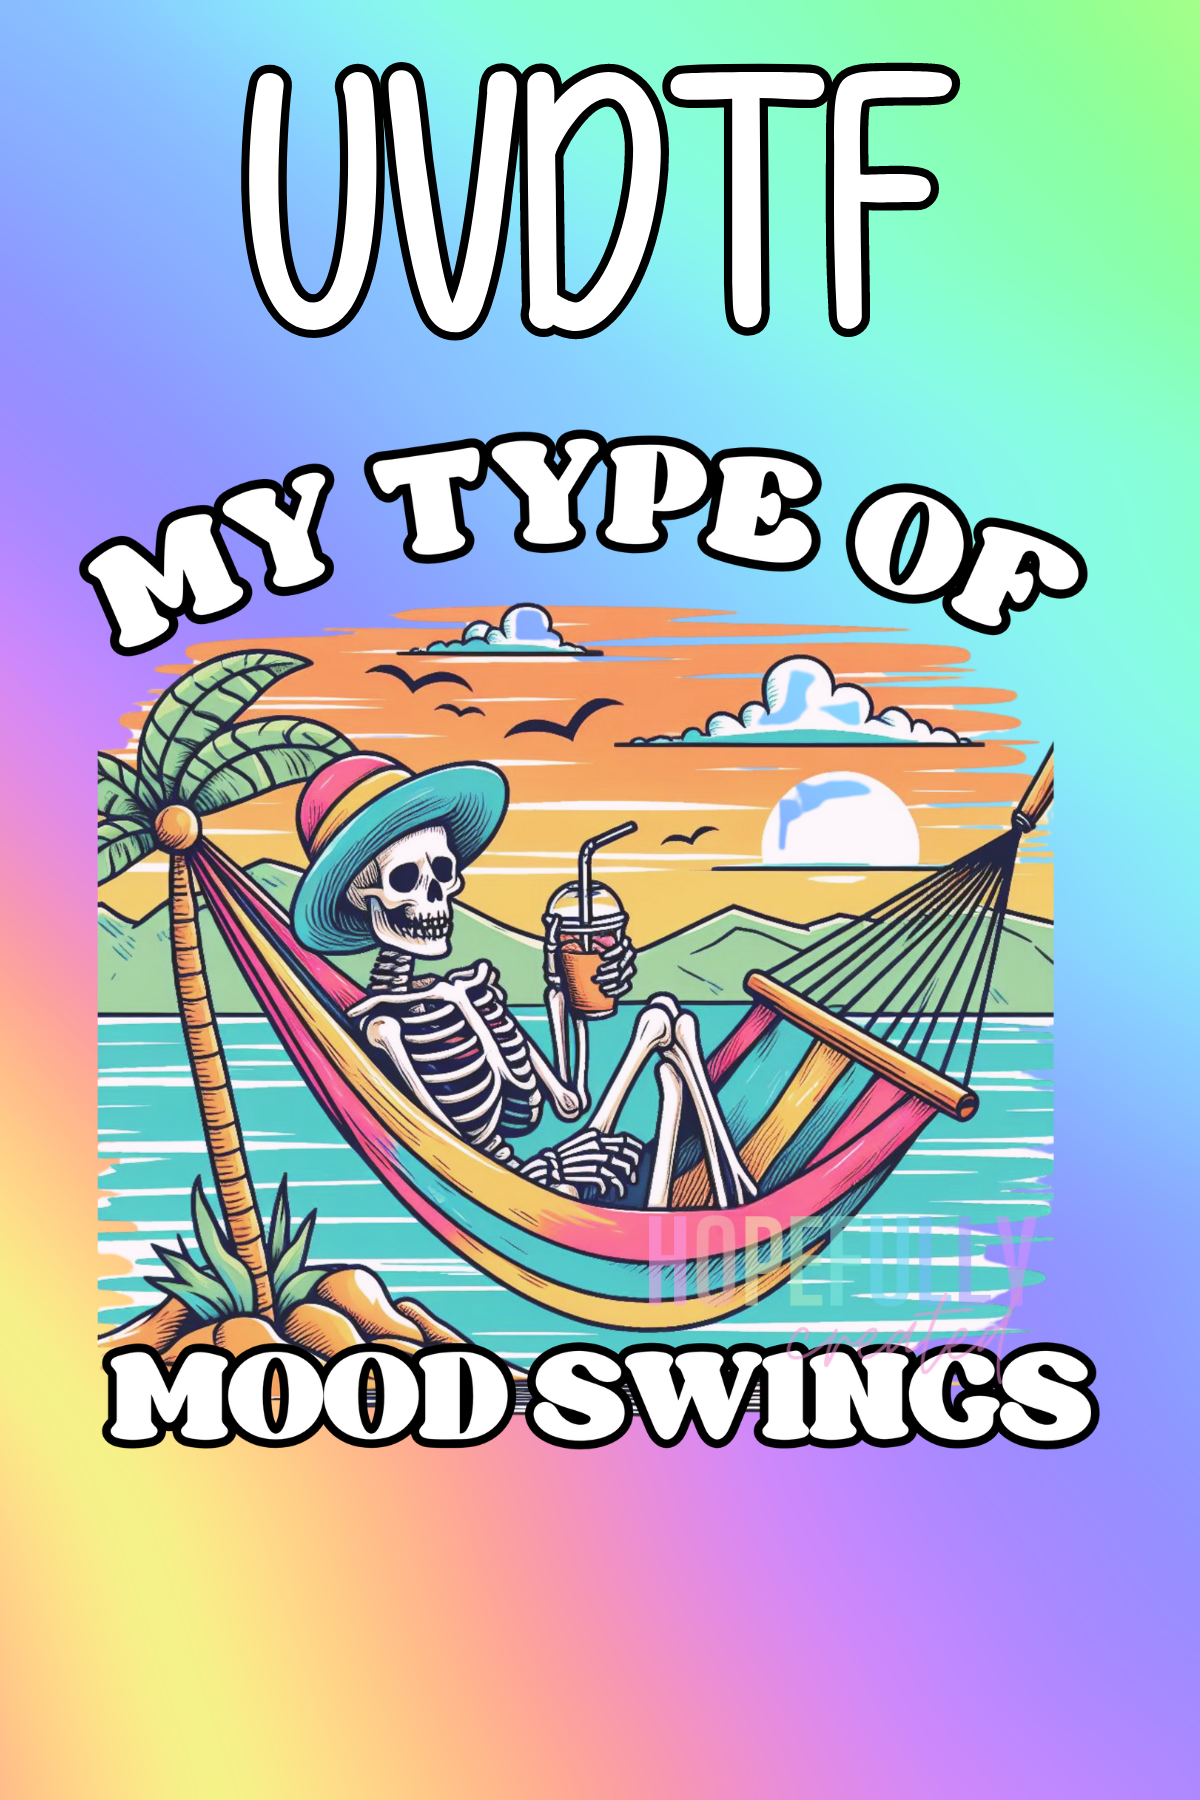 Mood Swings UVDTF Decal